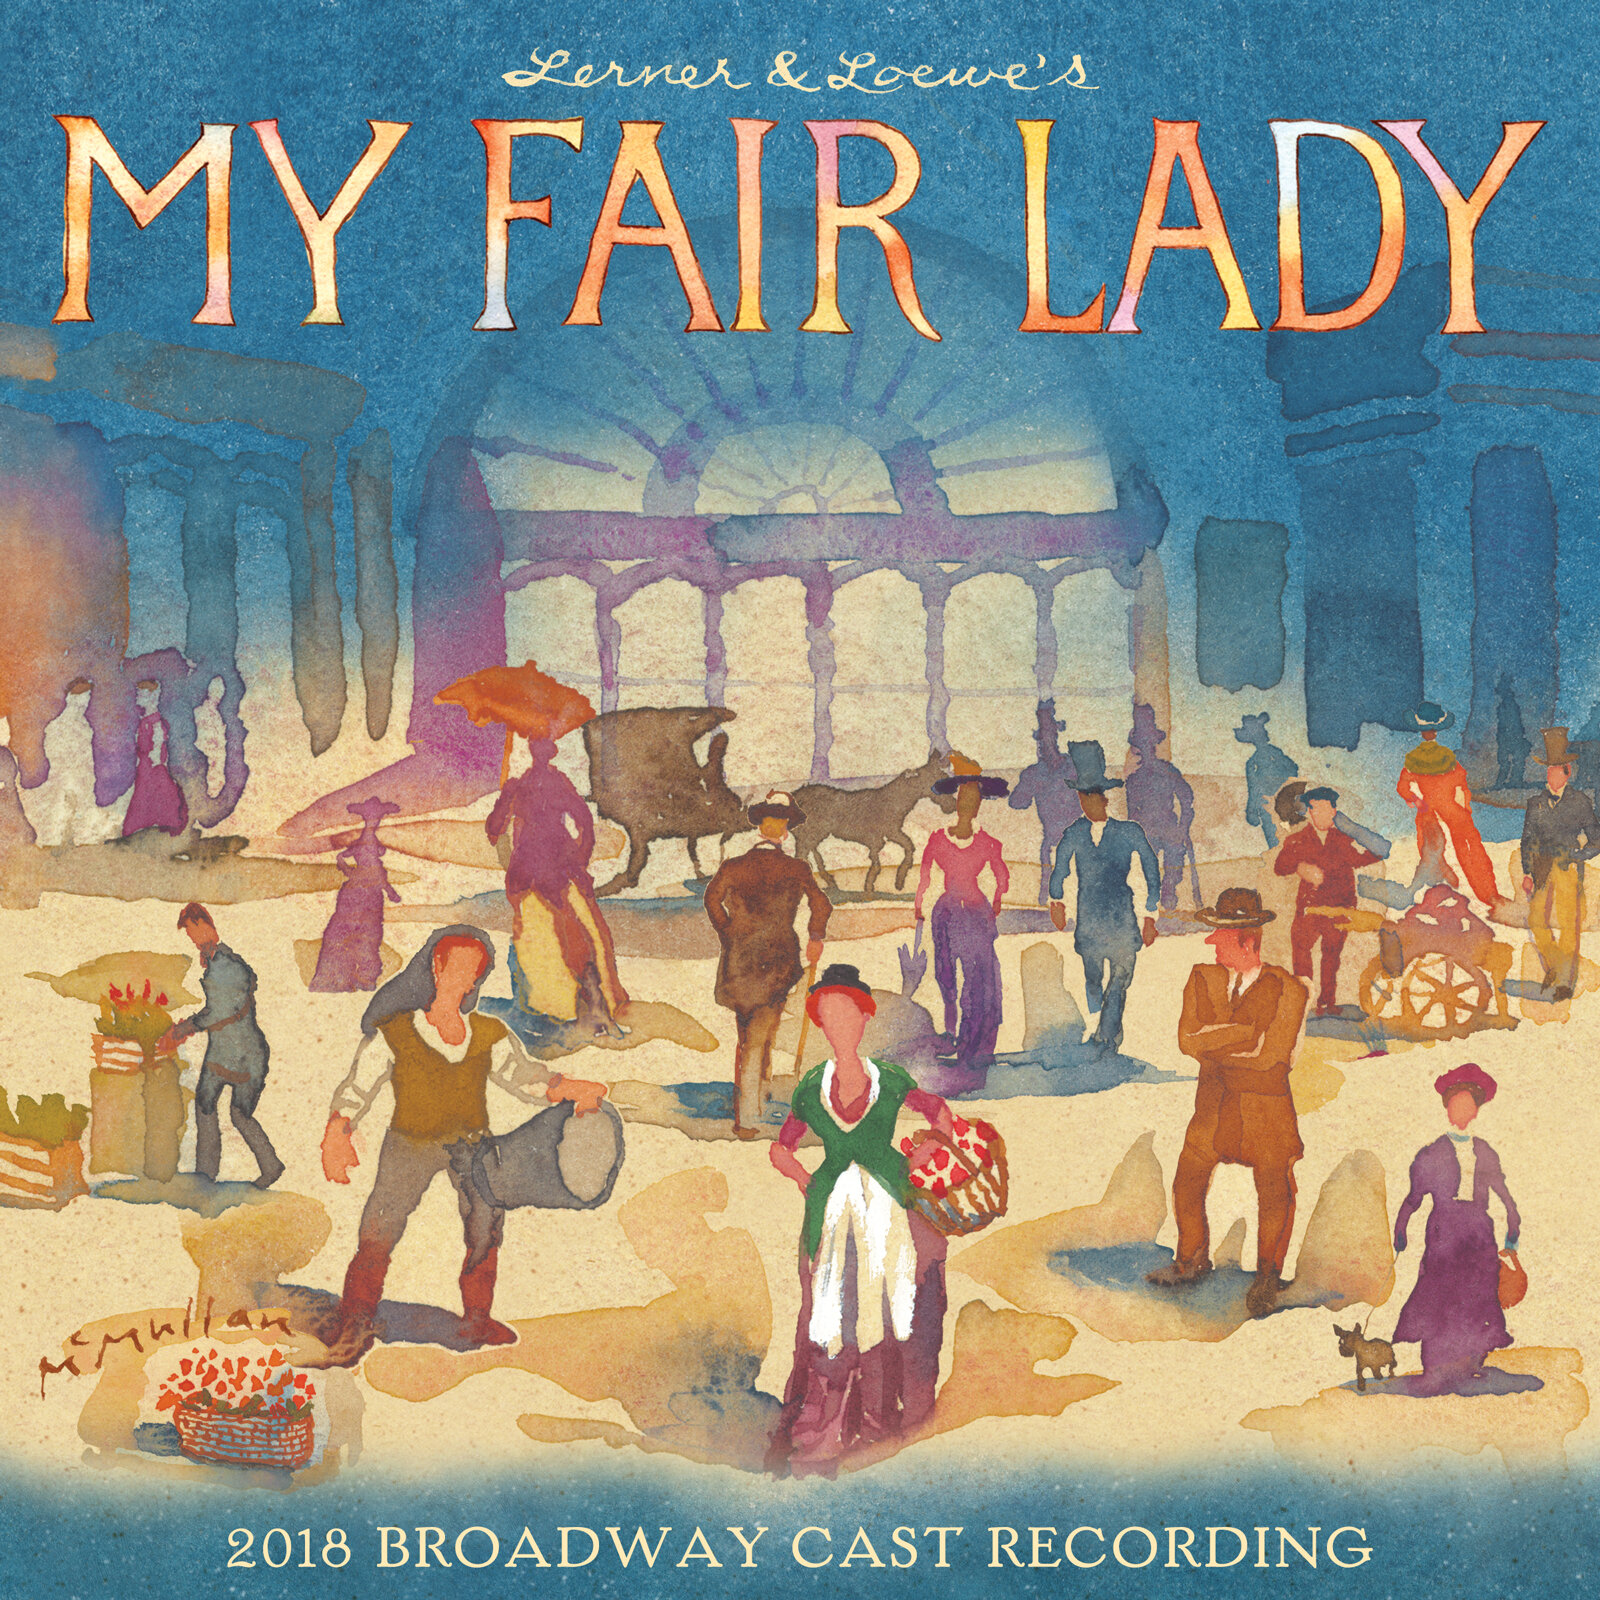 My Fair Lady Musical Theatre Art Poster Print